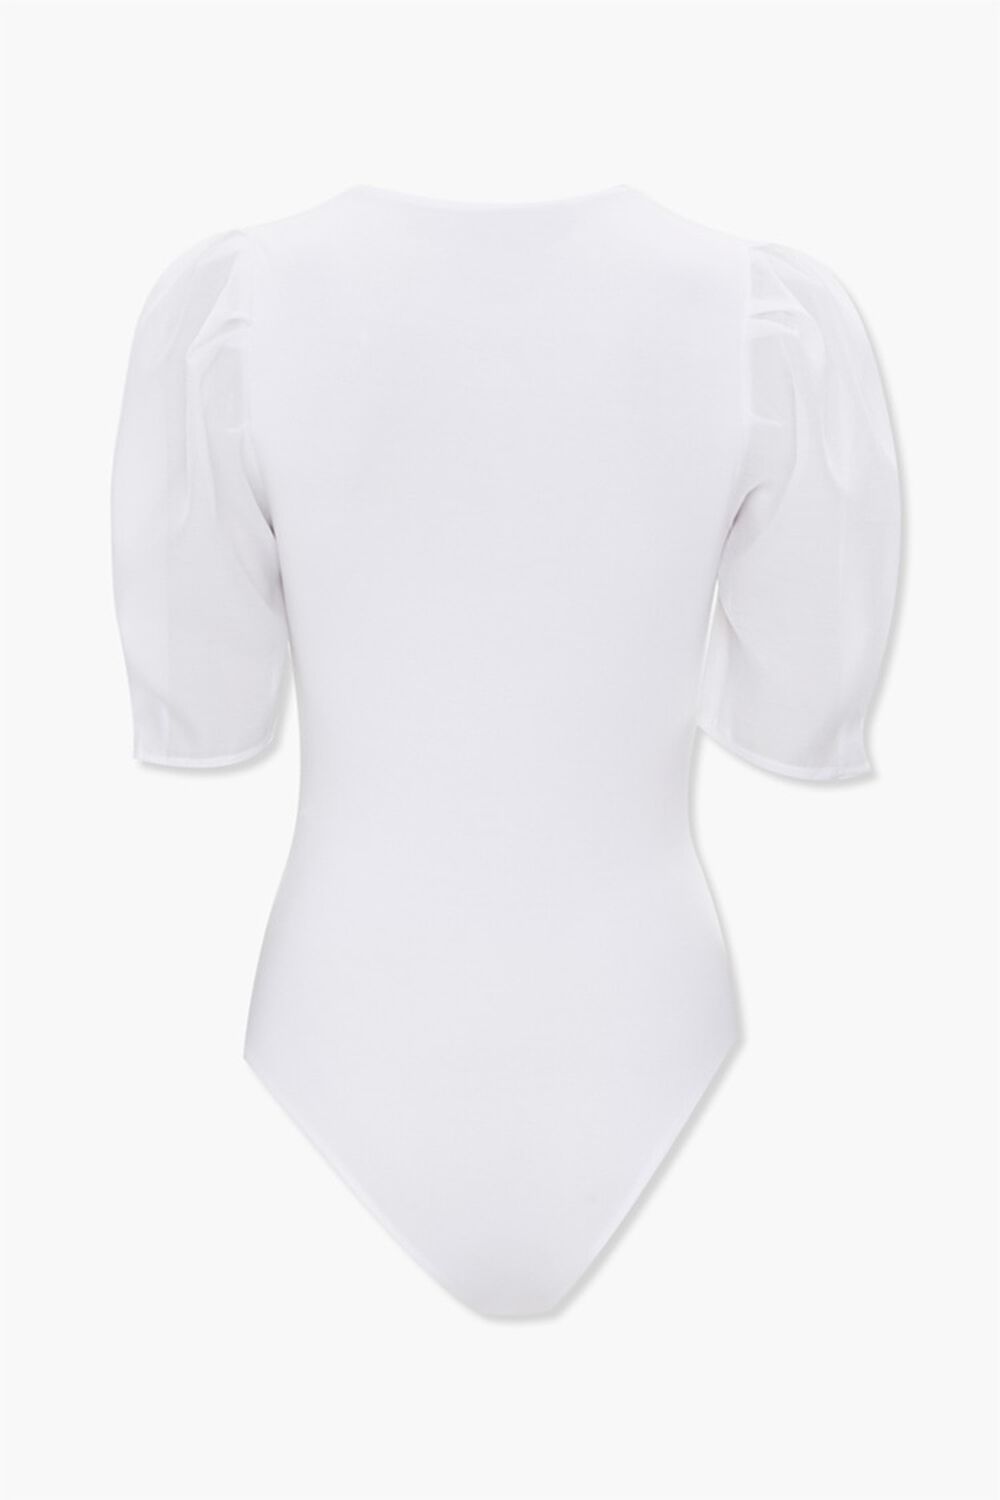 WHITE Sheer Puff-Sleeve Bodysuit, image 2